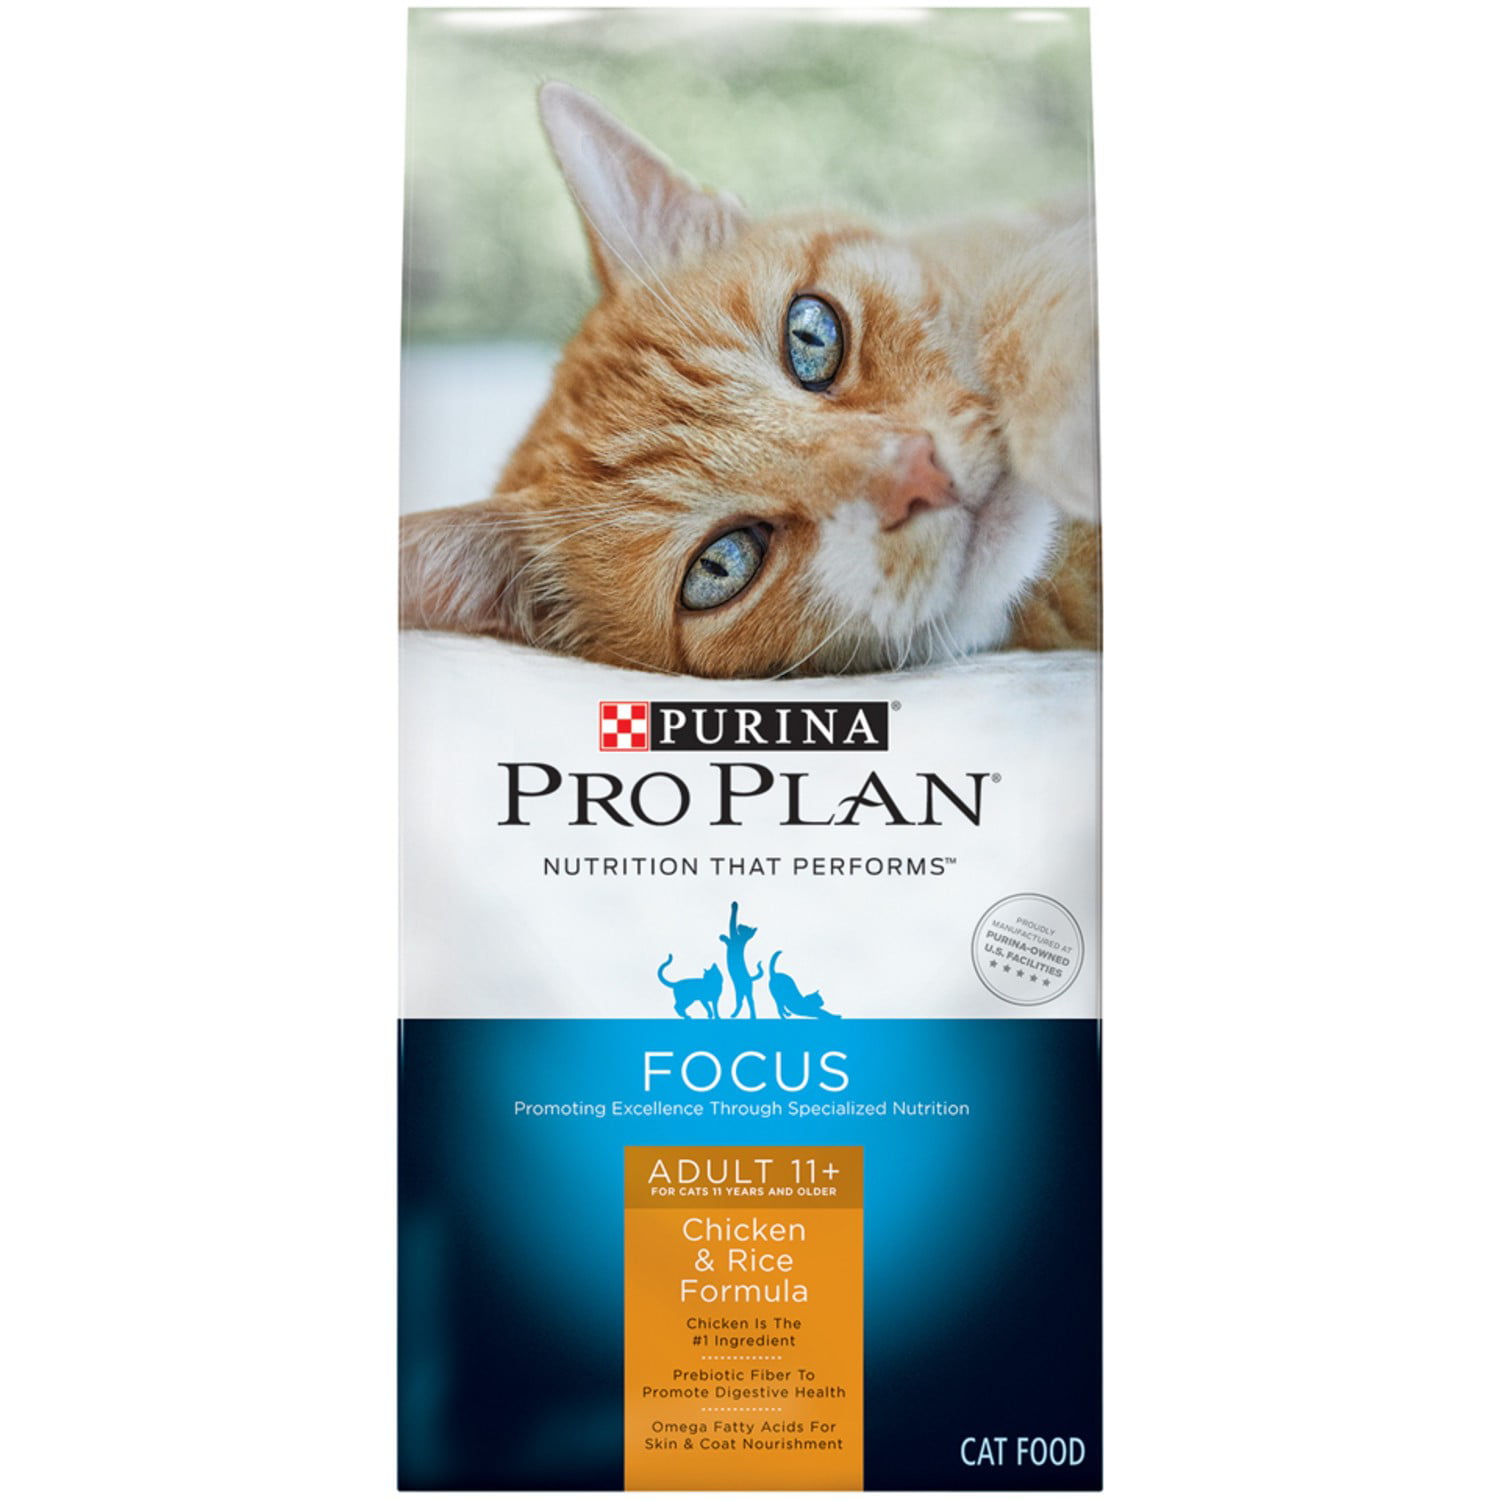 purina-pro-plan-focus-adult-11-chicken-rice-formula-senior-dry-cat